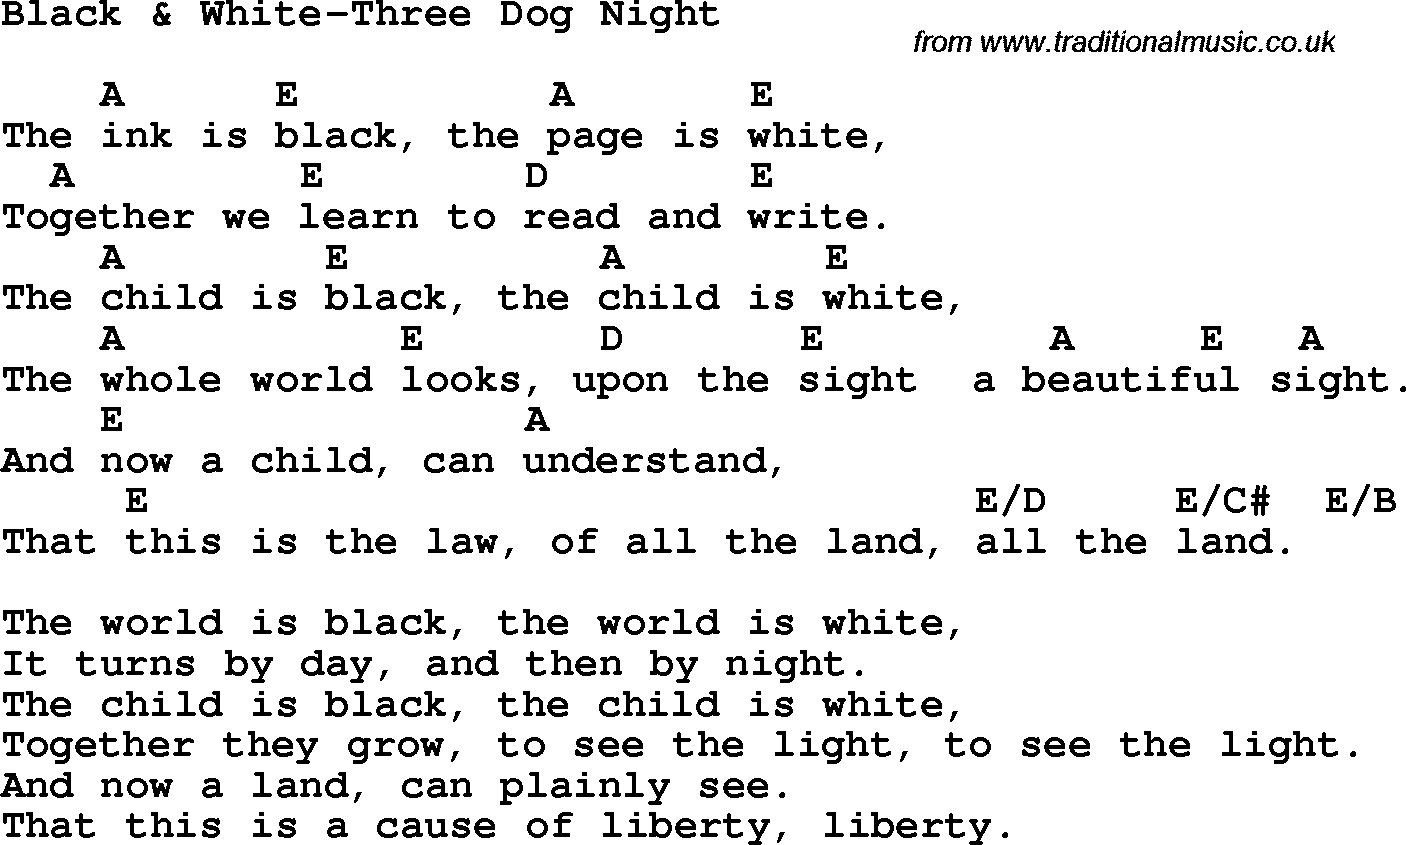 Protest Song Black & White-Three Dog Night lyrics and chords